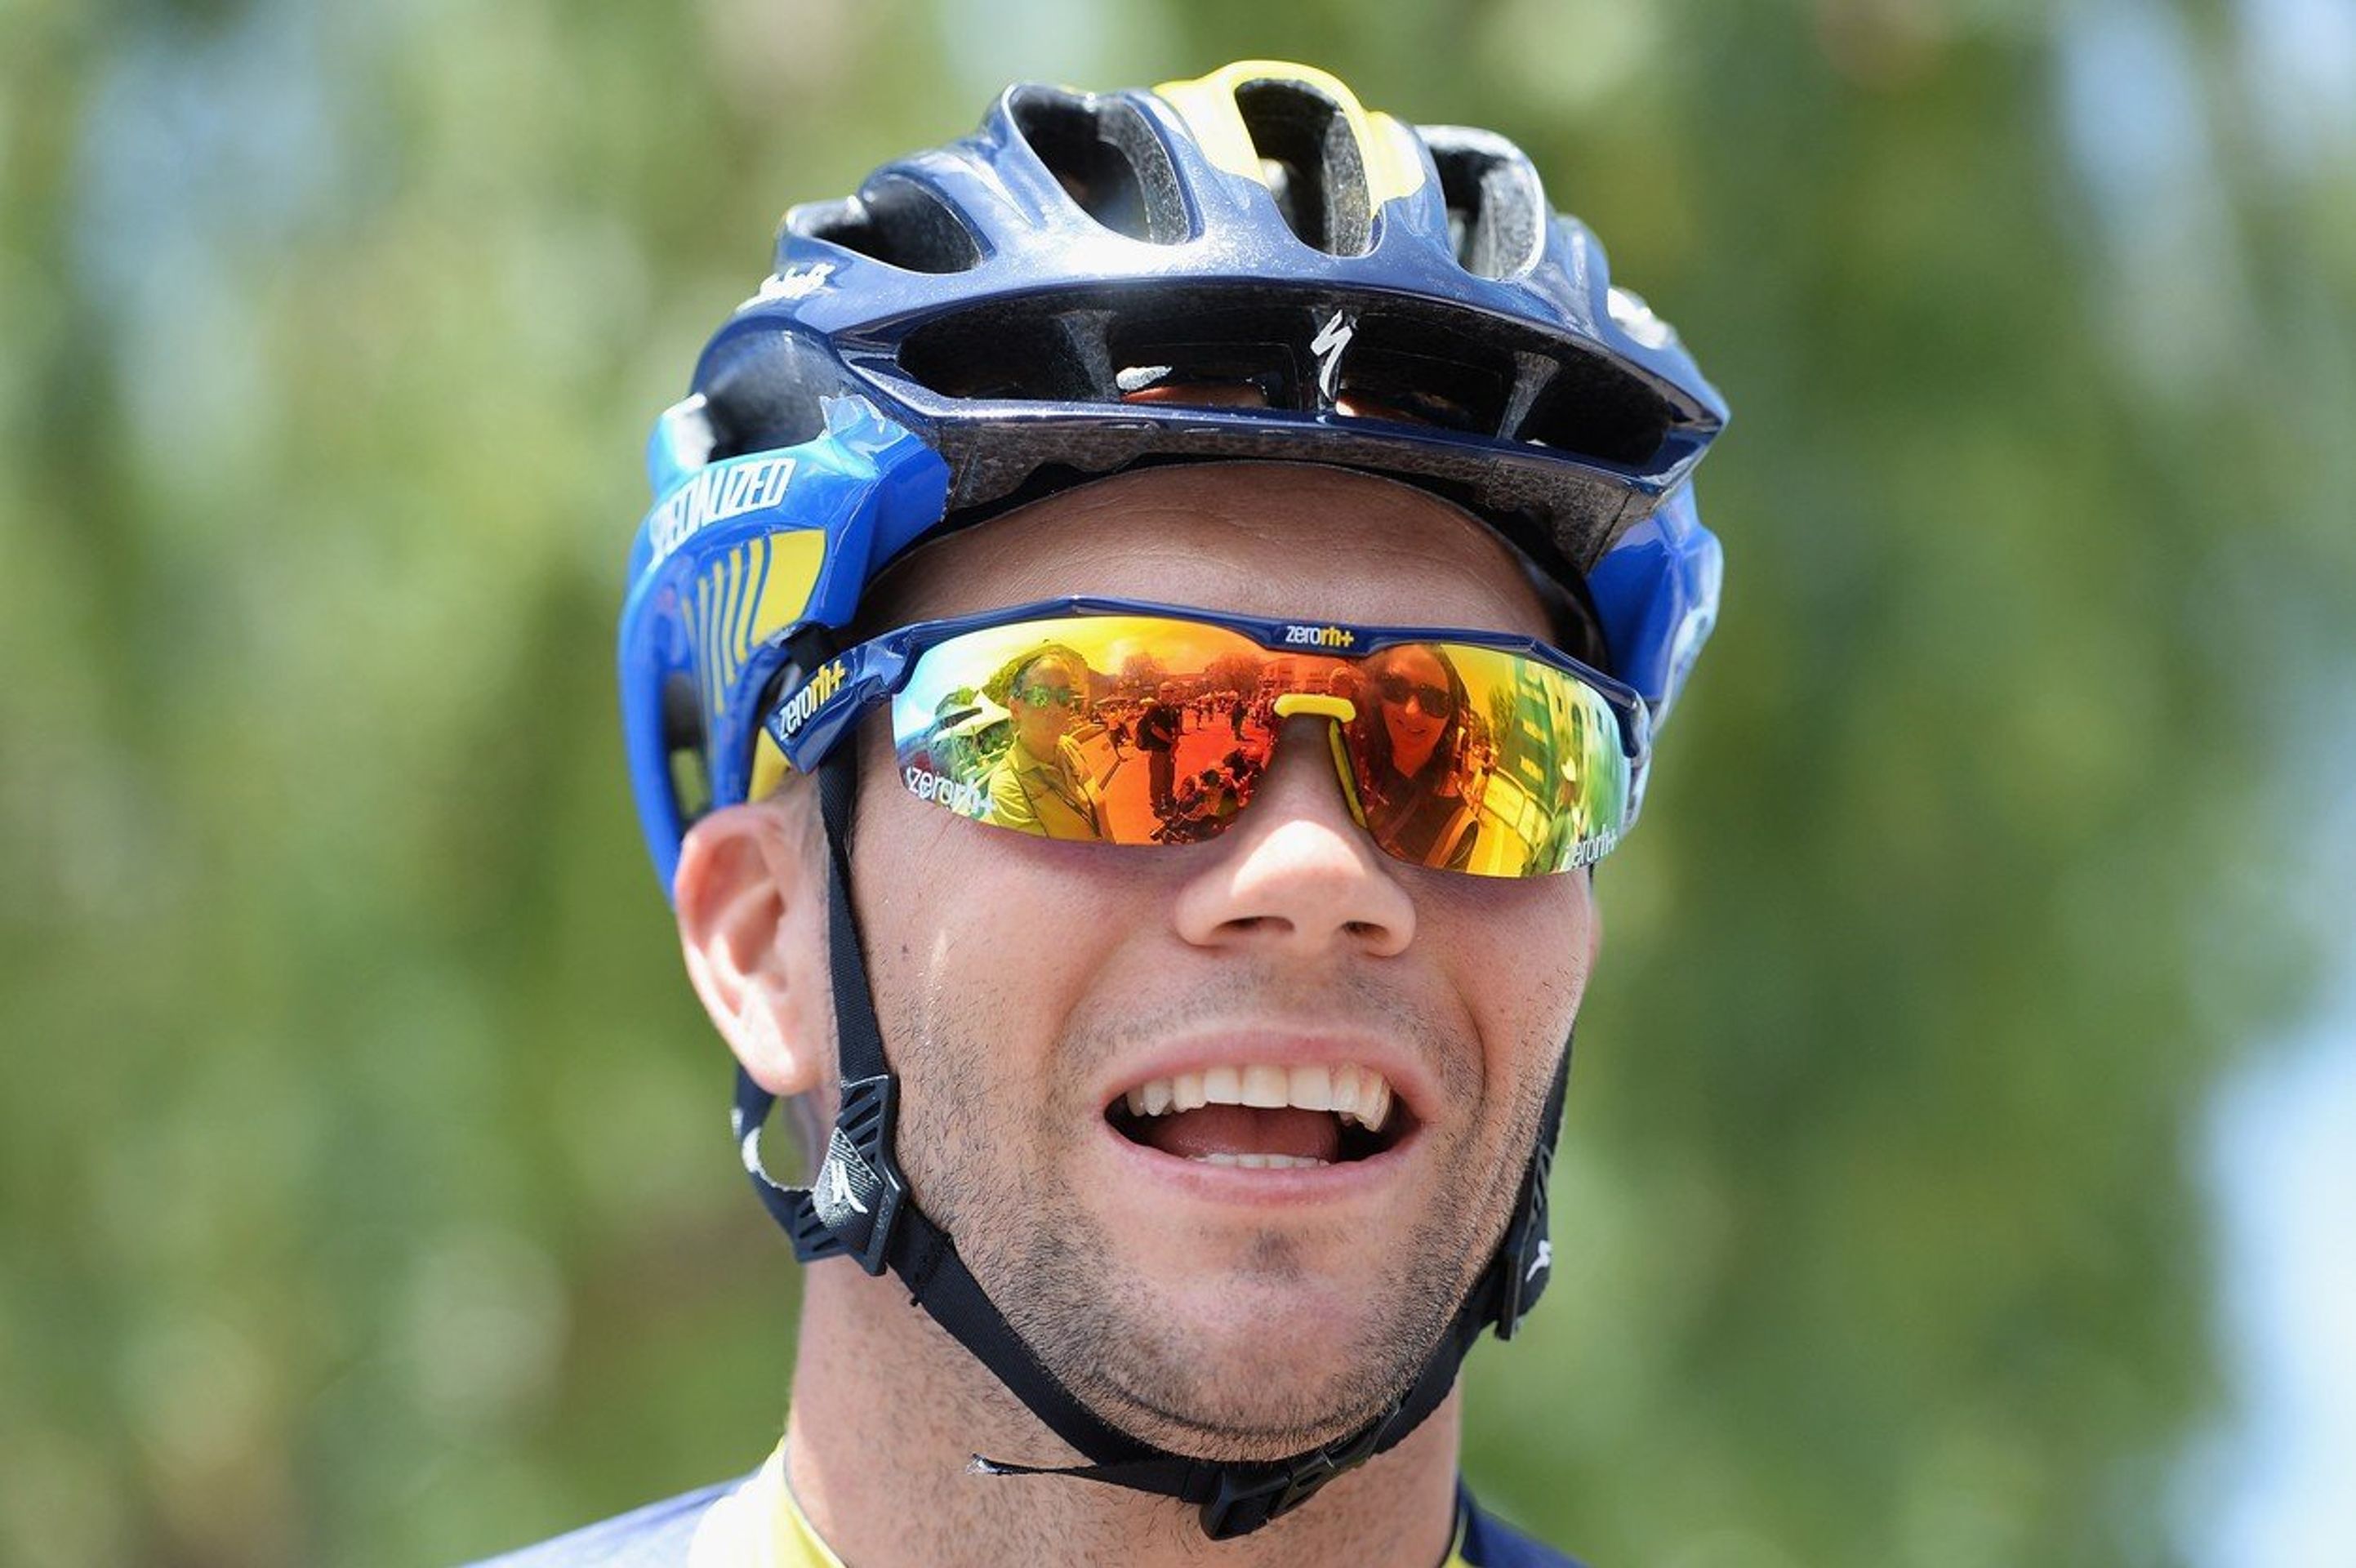 Jonathan Cantwell - GALERIE: Cyklista Jonathan Cantwell náhle zemřel ve věku 36 let (4/4)